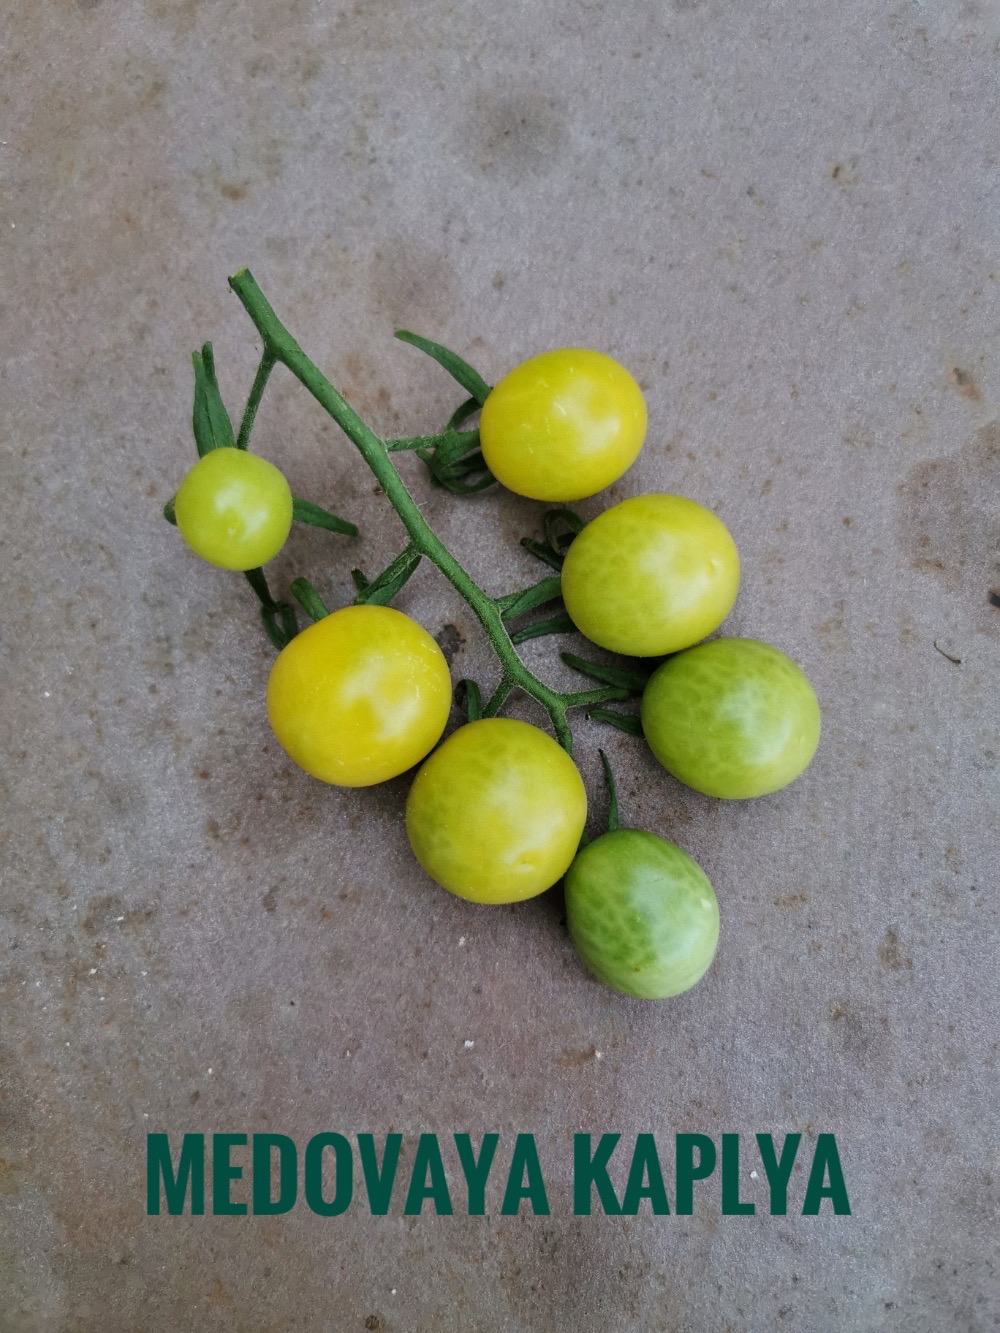 Pomodoro varietà Medovaya Kaplya | Fattipomodorituoi | ©foto Sandra Longinotti